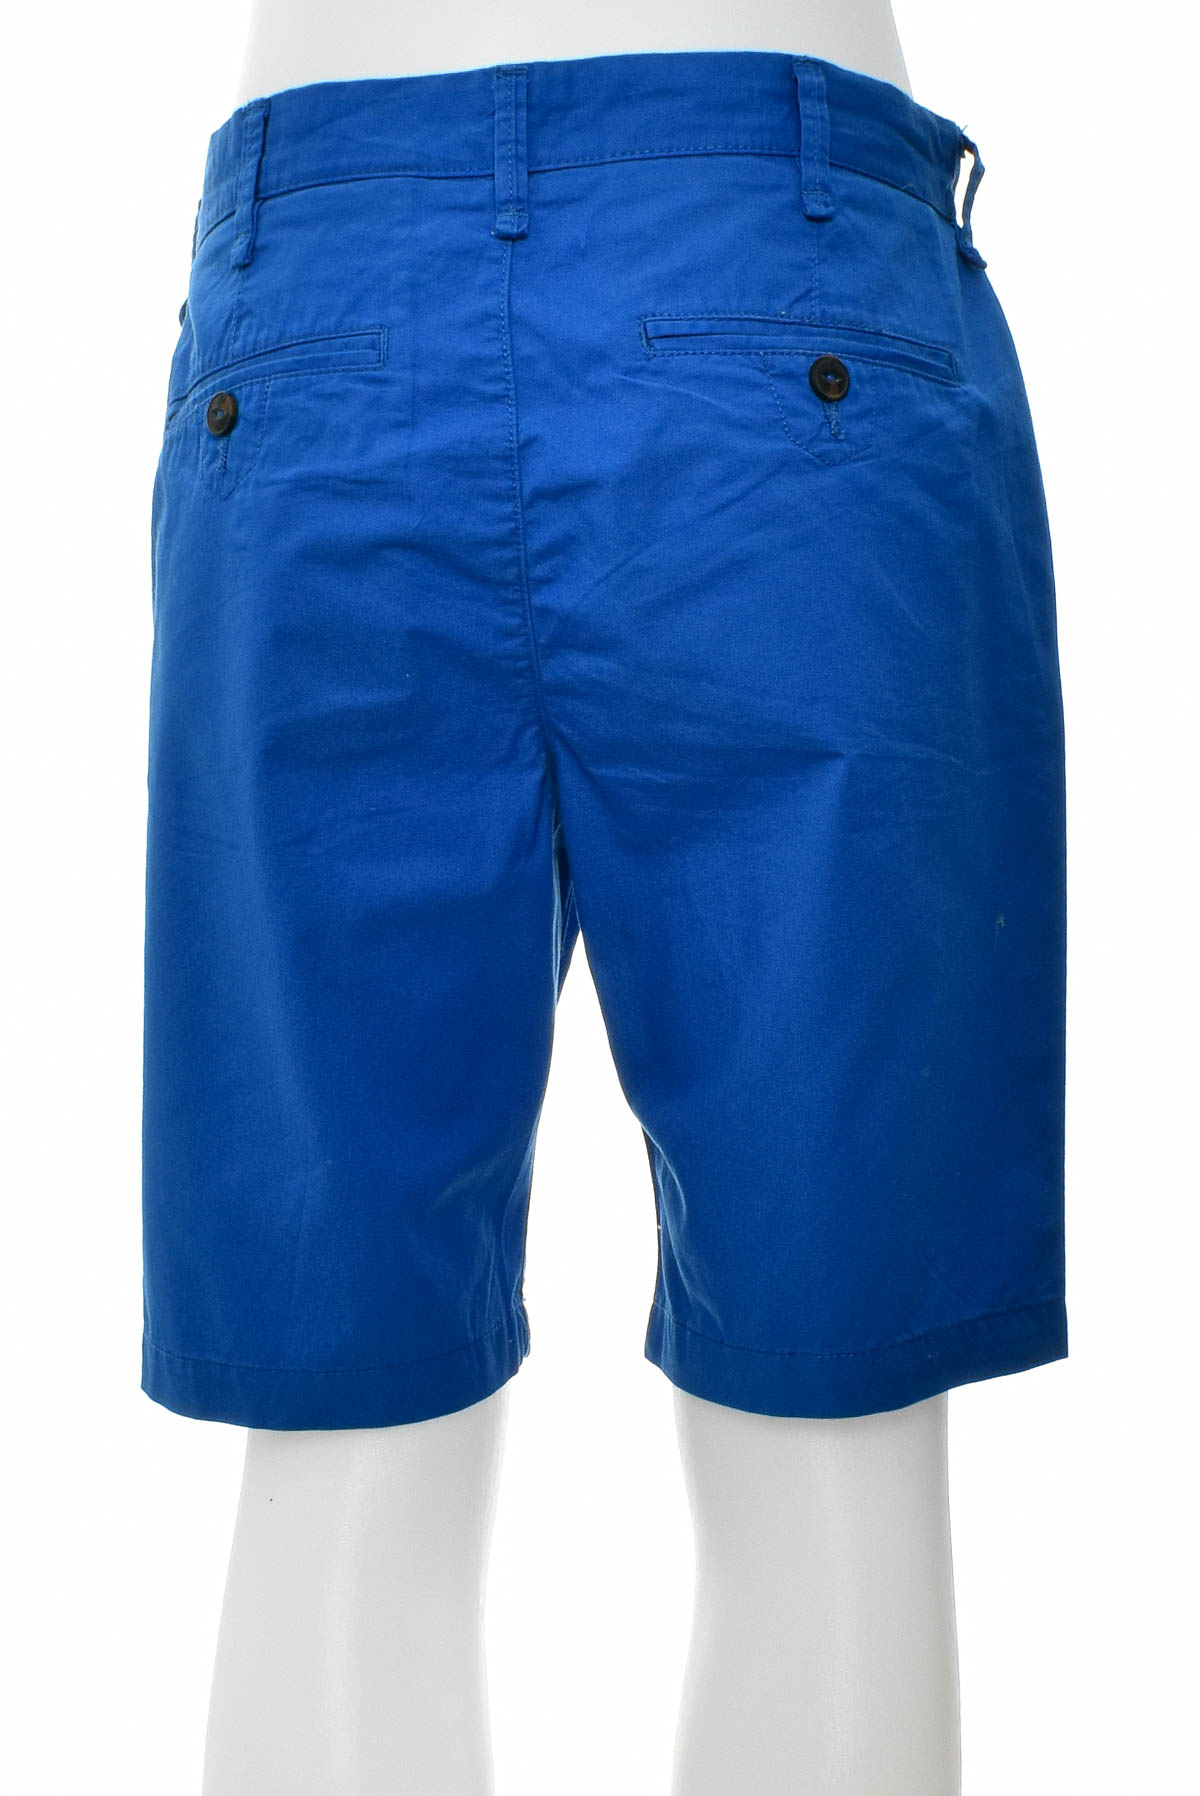 Men's shorts - Red Herring - 1